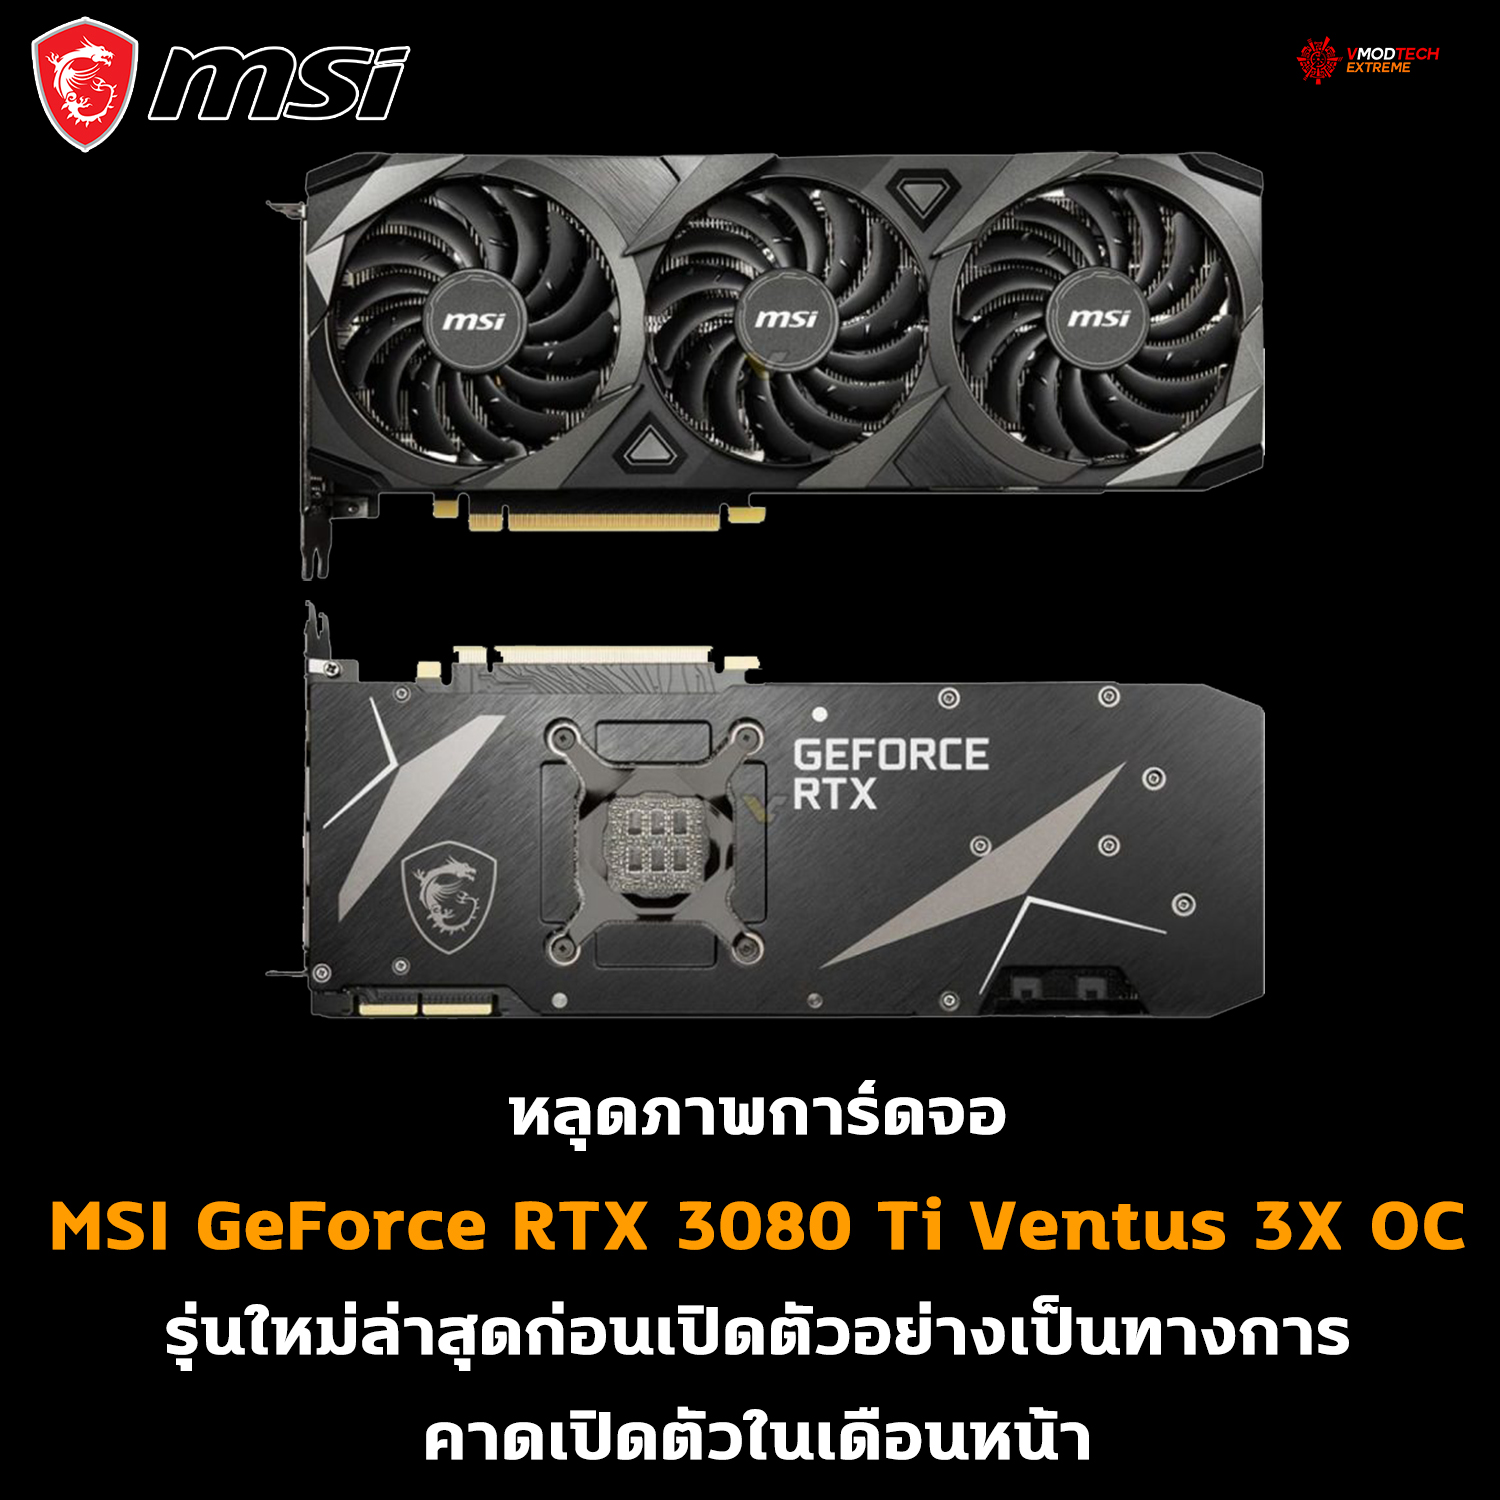 msi geforce rtx 3080 ti ventus 3x oc หลุดภาพการ์ดจอ MSI GeForce RTX 3080 Ti Ventus 3X OC รุ่นใหม่ล่าสุดก่อนเปิดตัวอย่างเป็นทางการ